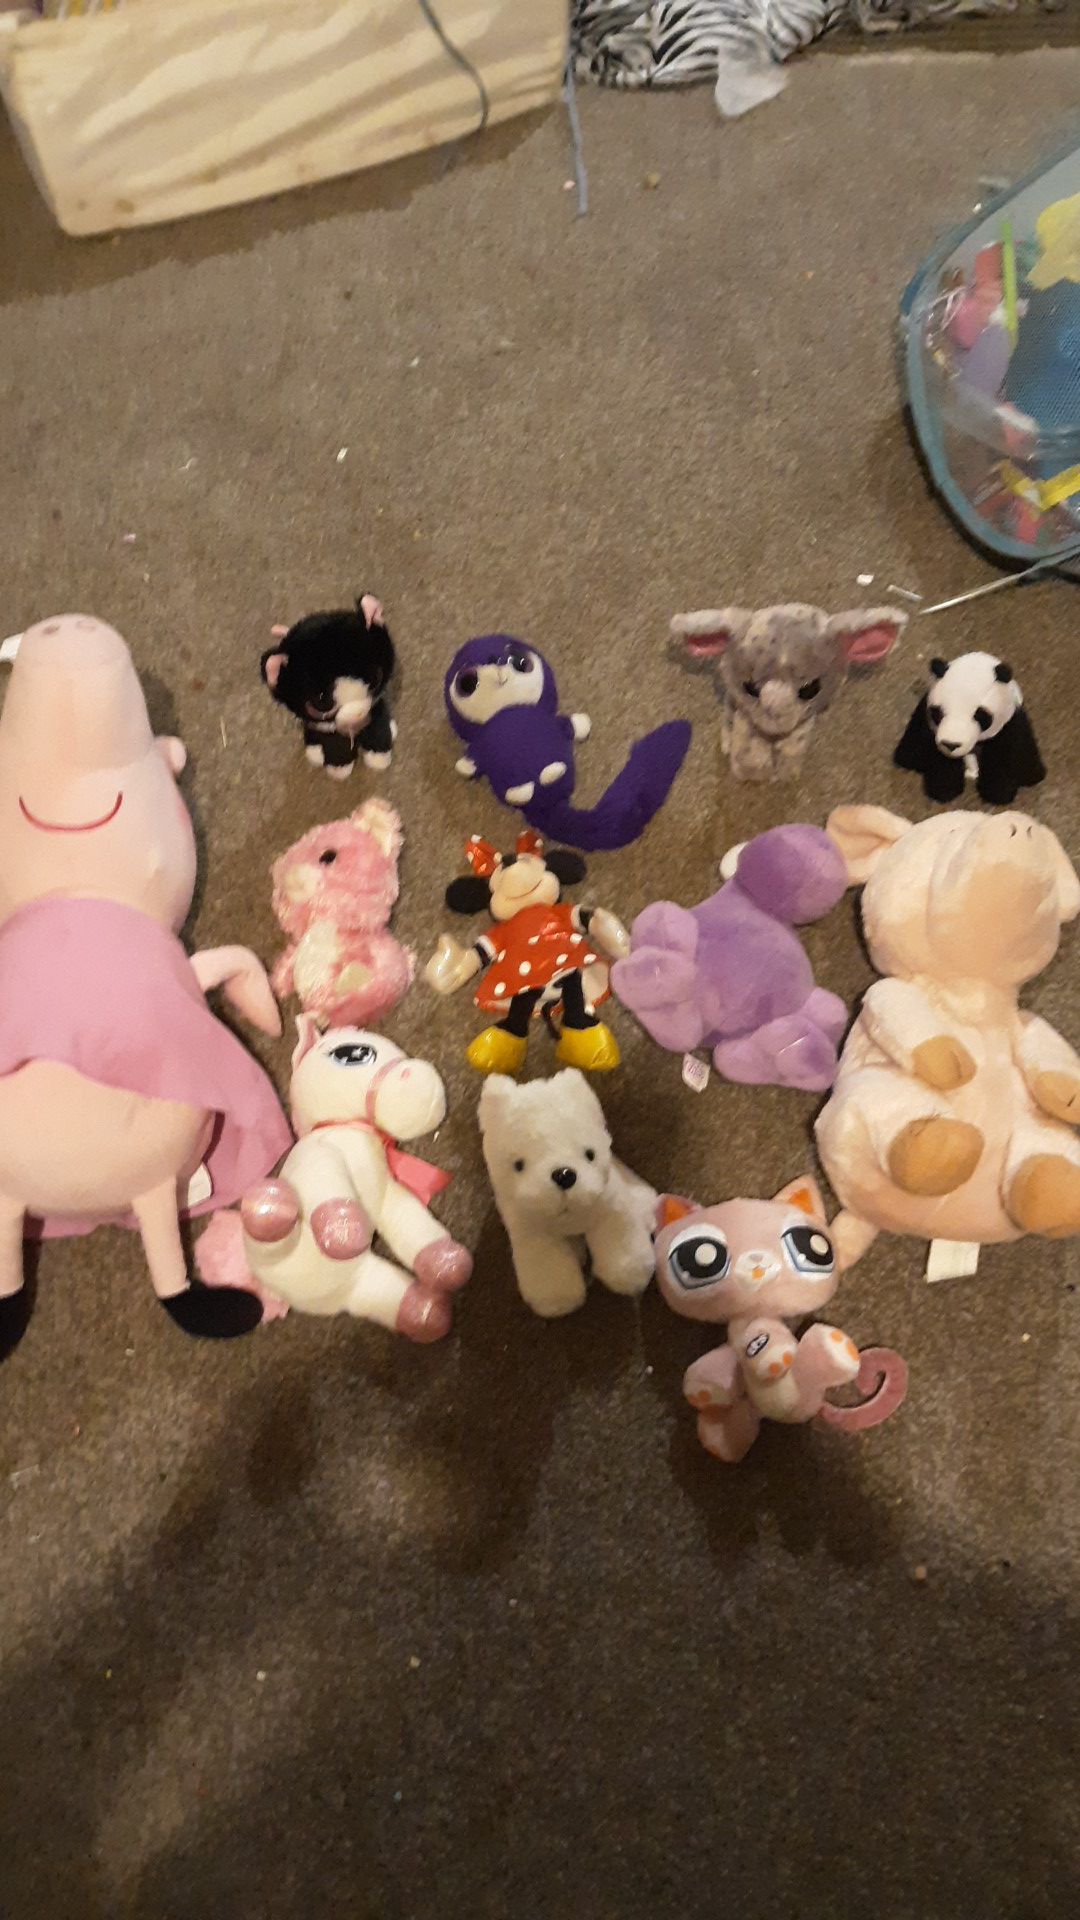 Plushies and stuffed animals